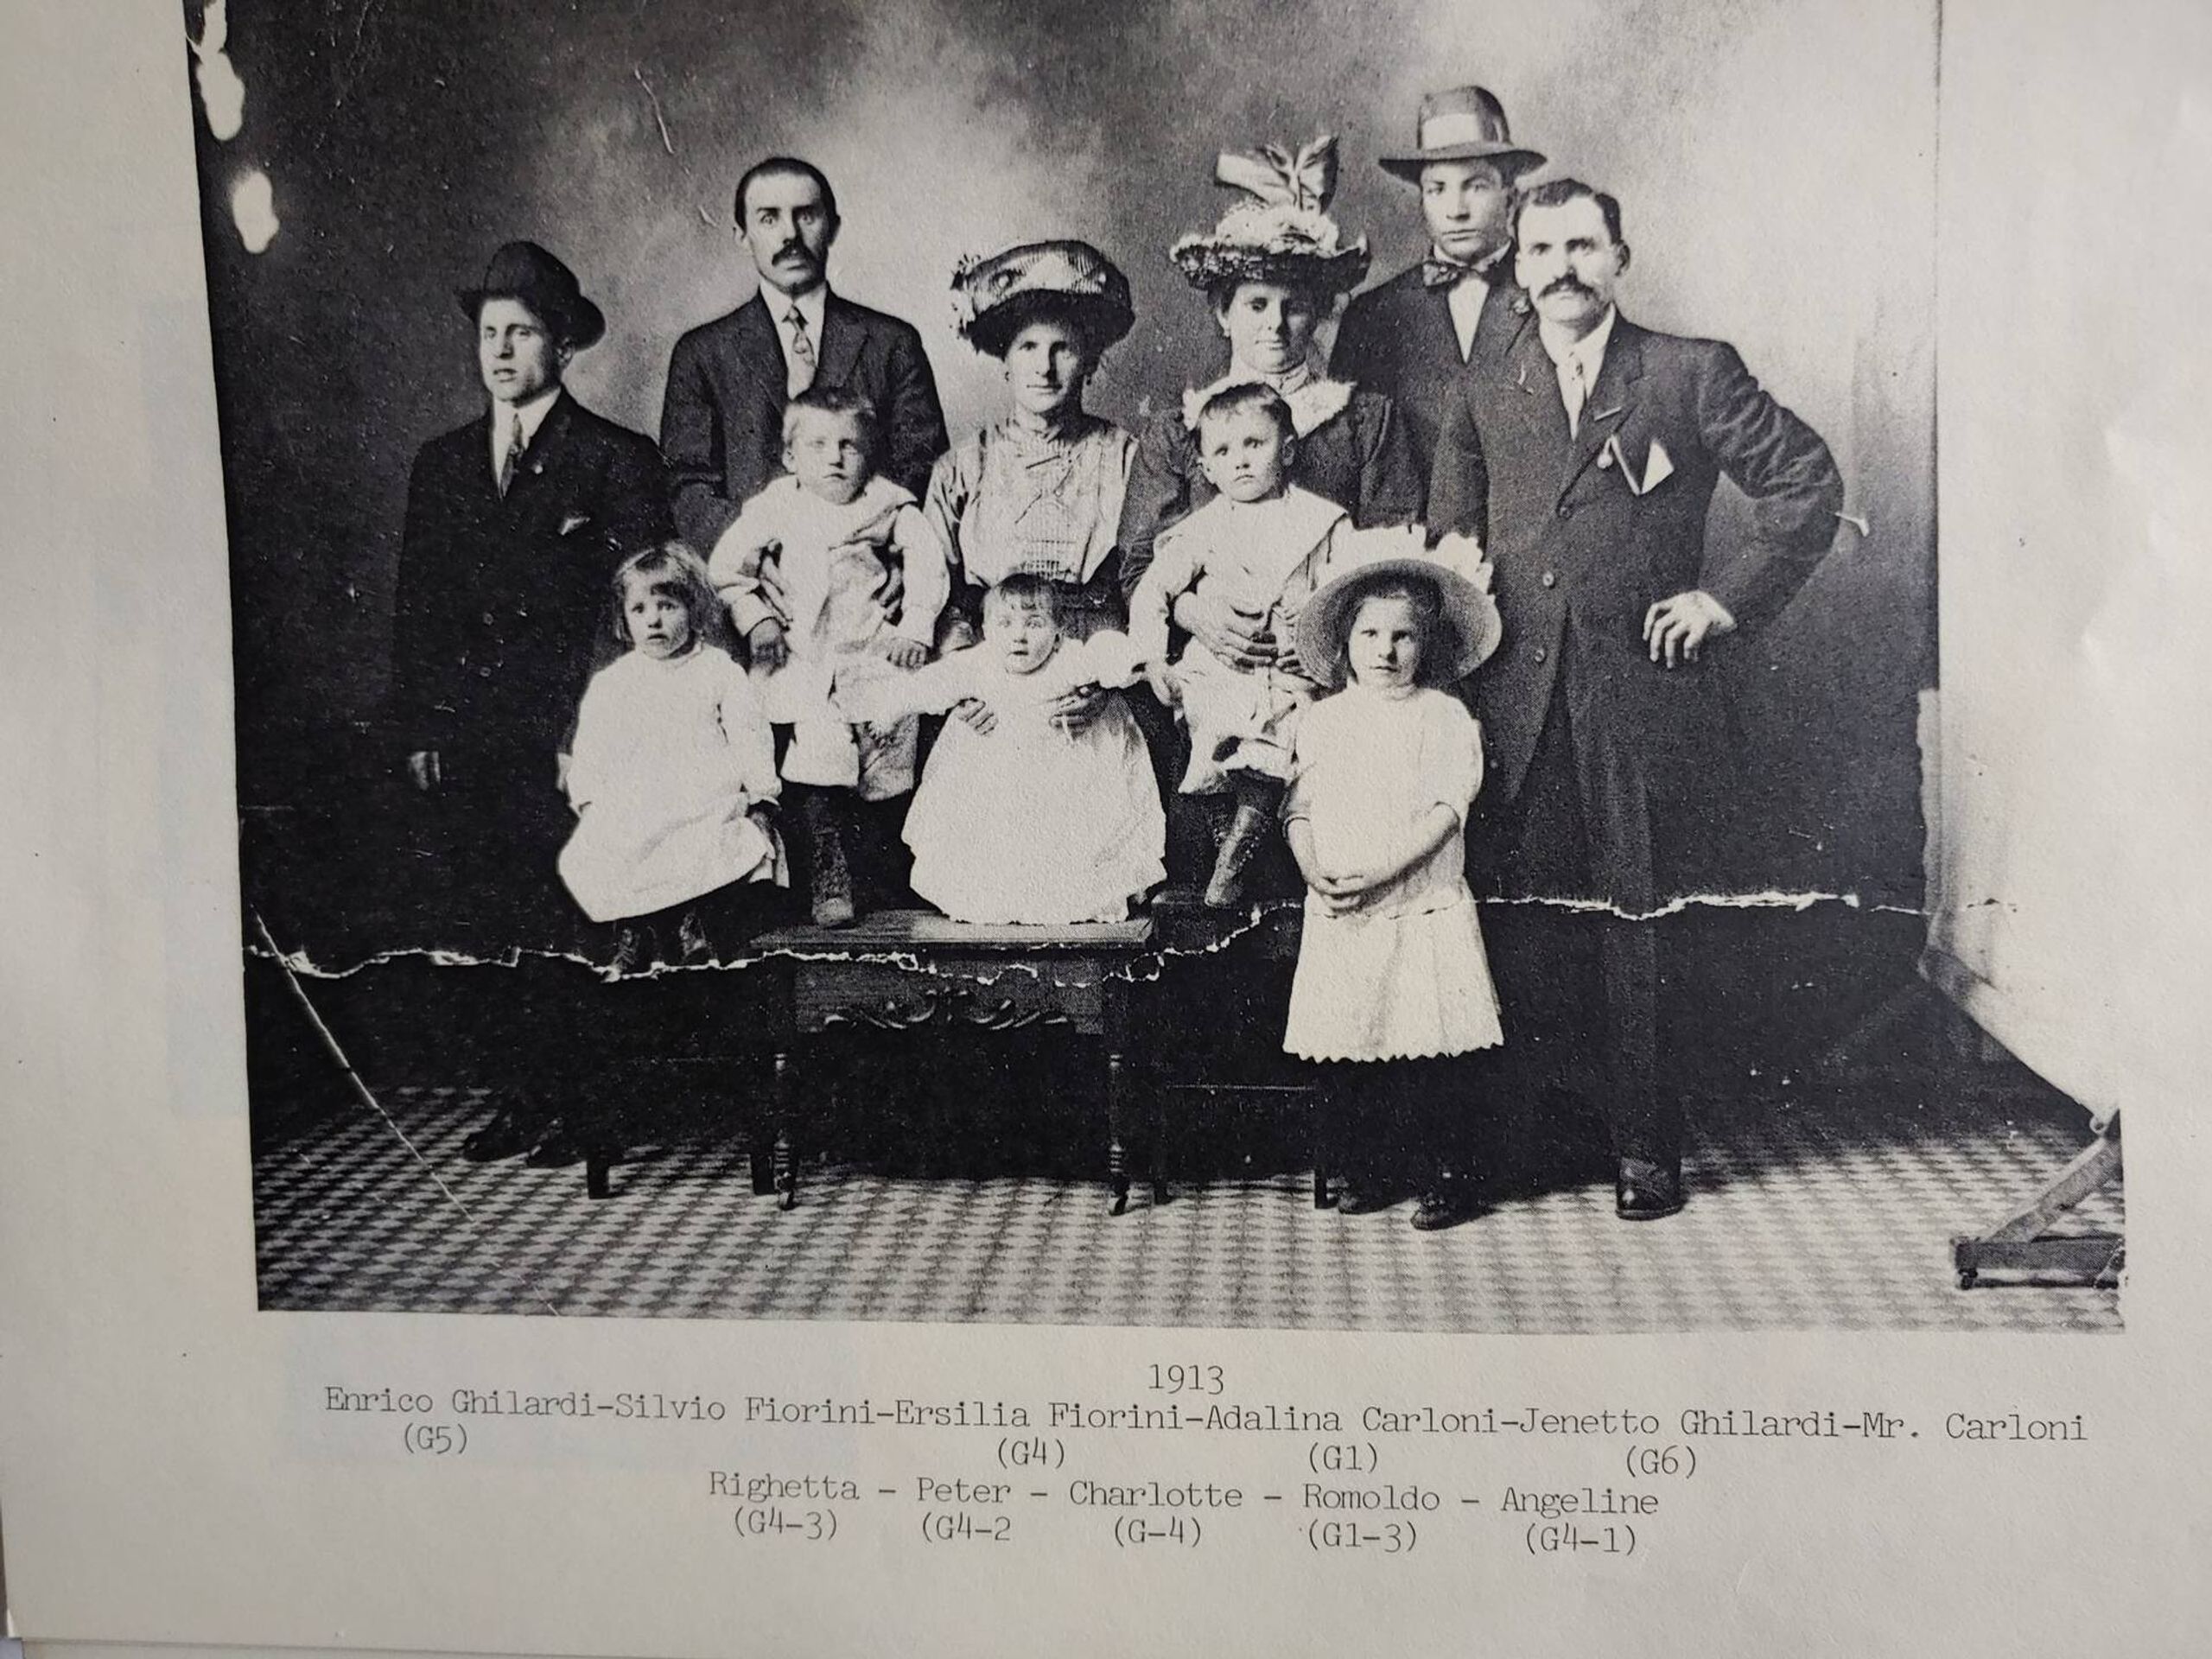 A 1913 portrait of the Ghilardi-Taramelli-Fiorini family